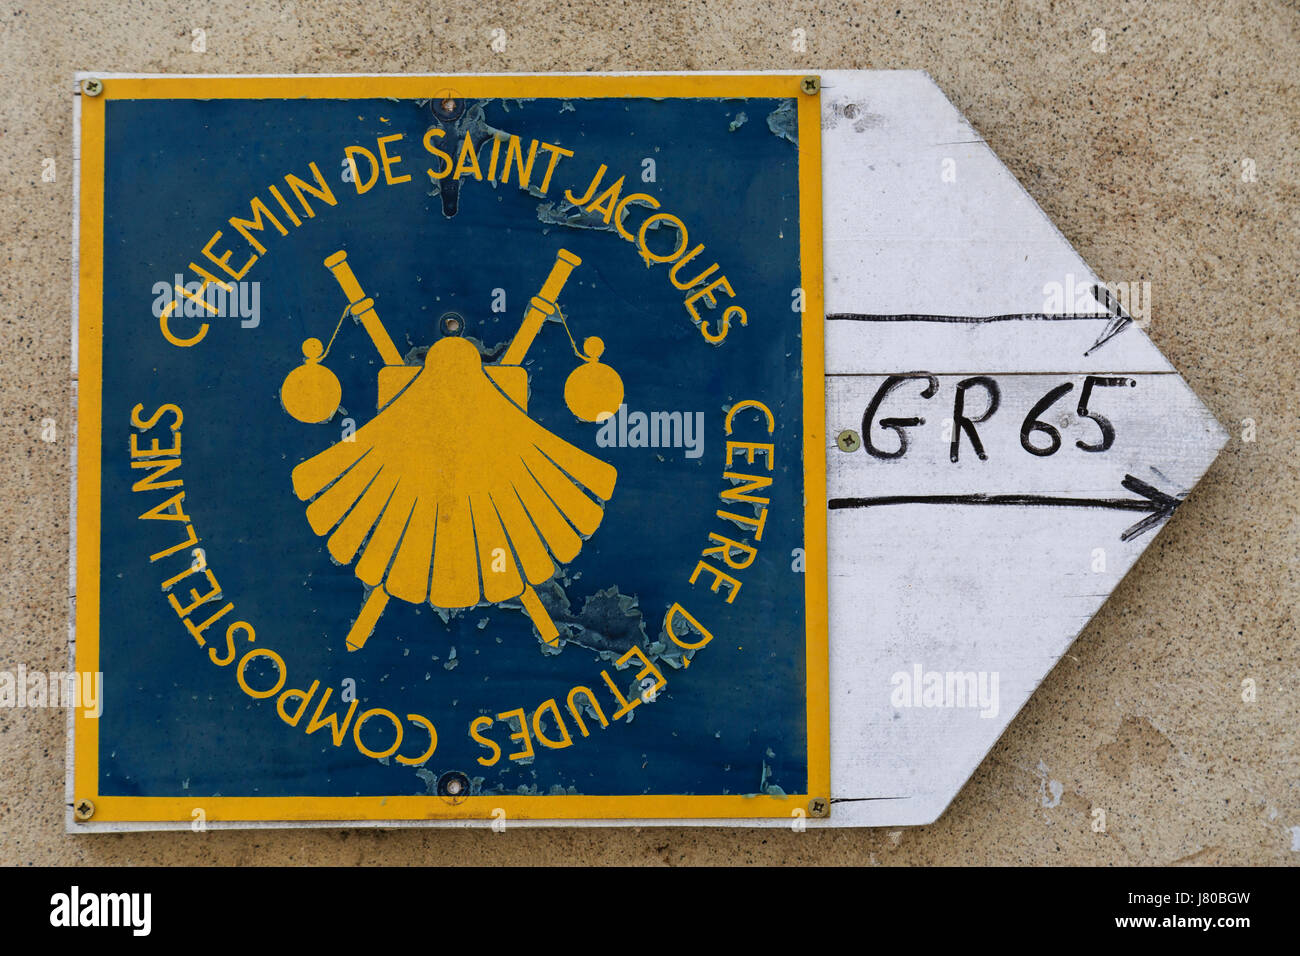 Francia, Gers, Larressingle, etichettato Les Plus Beaux Villages de France, segno per la strada per Saint Jacques de Compostela Foto Stock